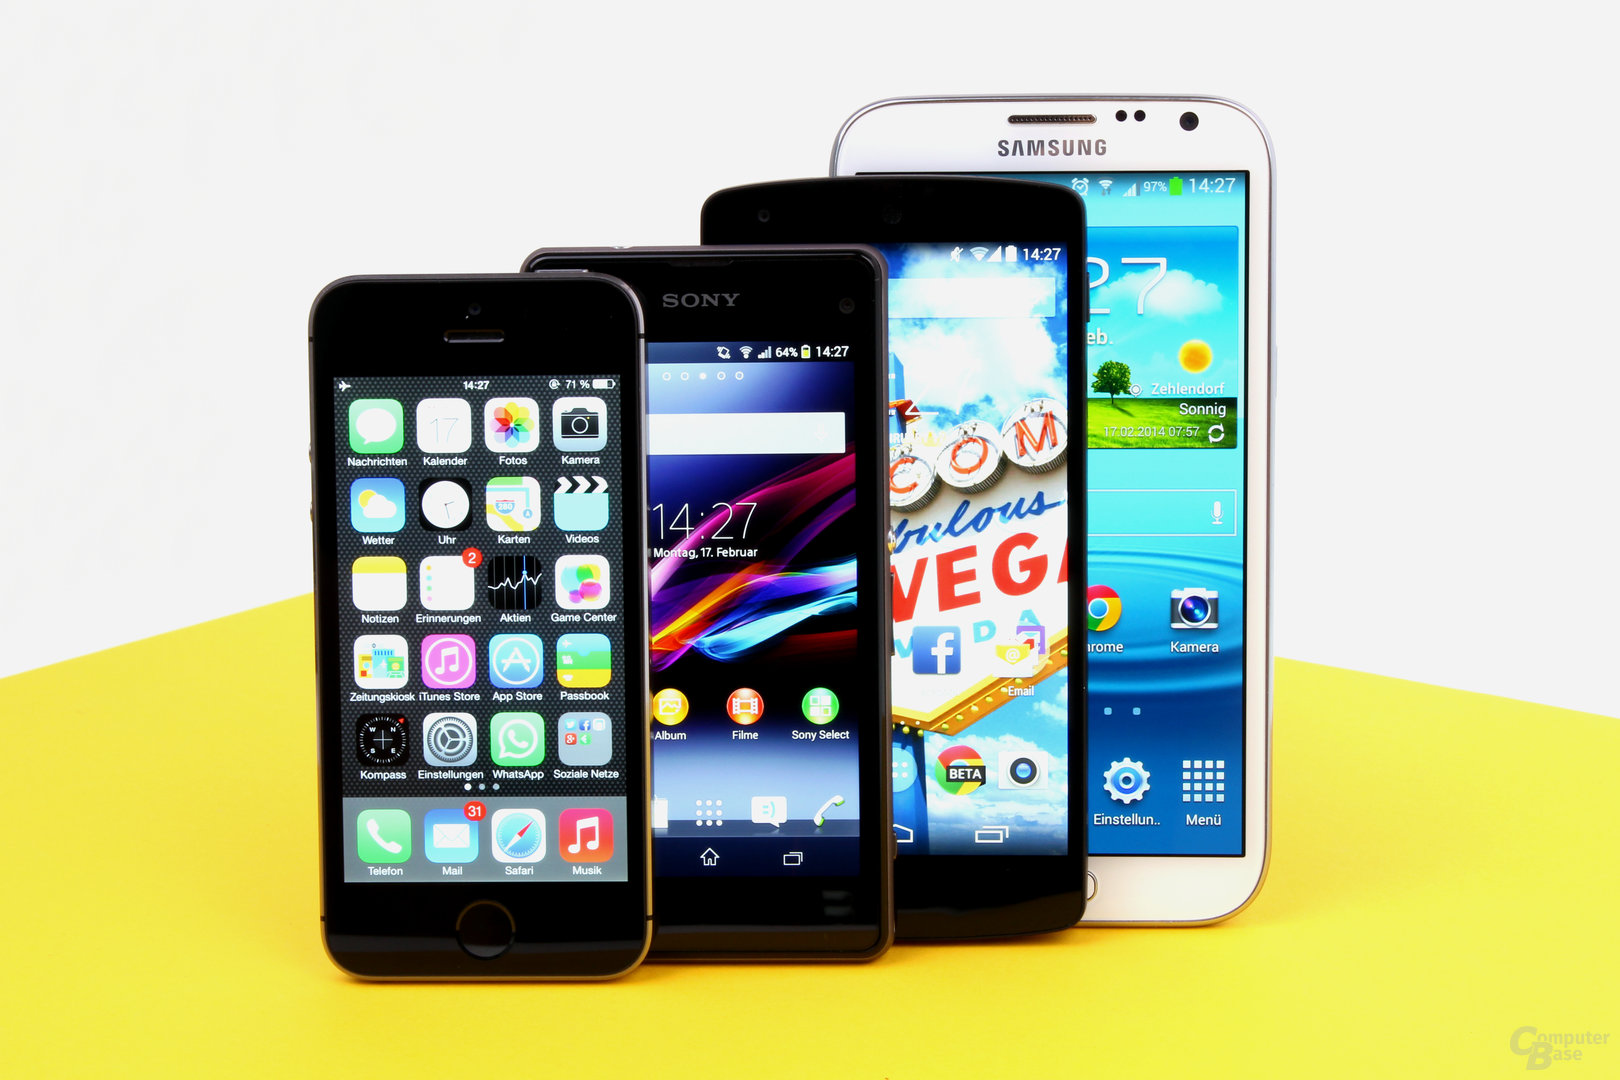 Apple iPhone 5S, Sony Xperia Z1 Compact, Google Nexus 5, Samsung Galaxy Note II